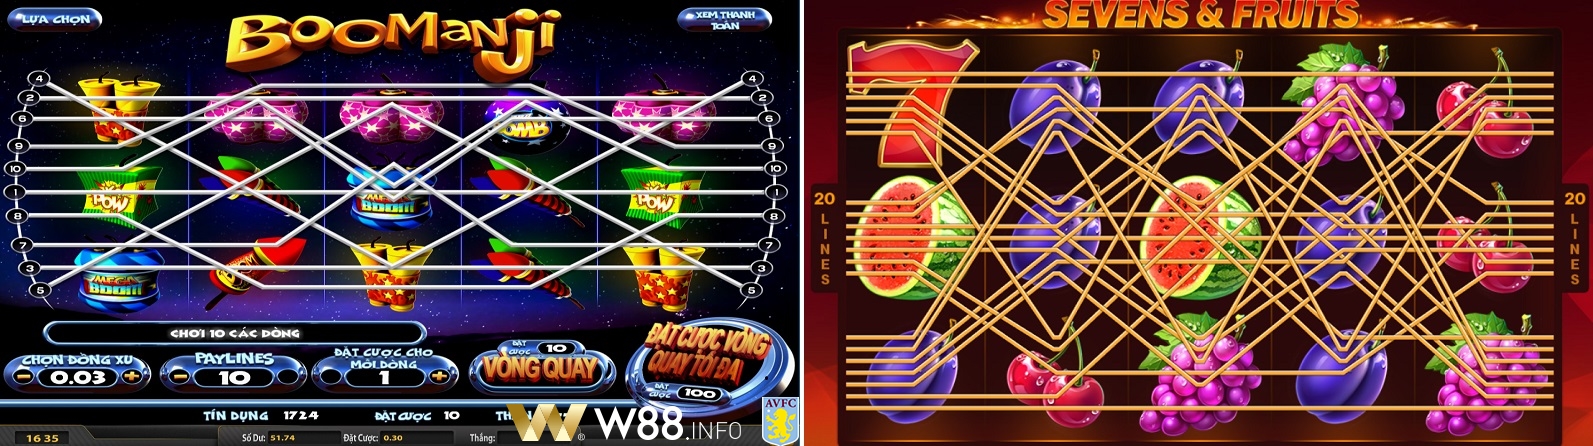 10-line-va-20-line-trung-thuong-slot-game